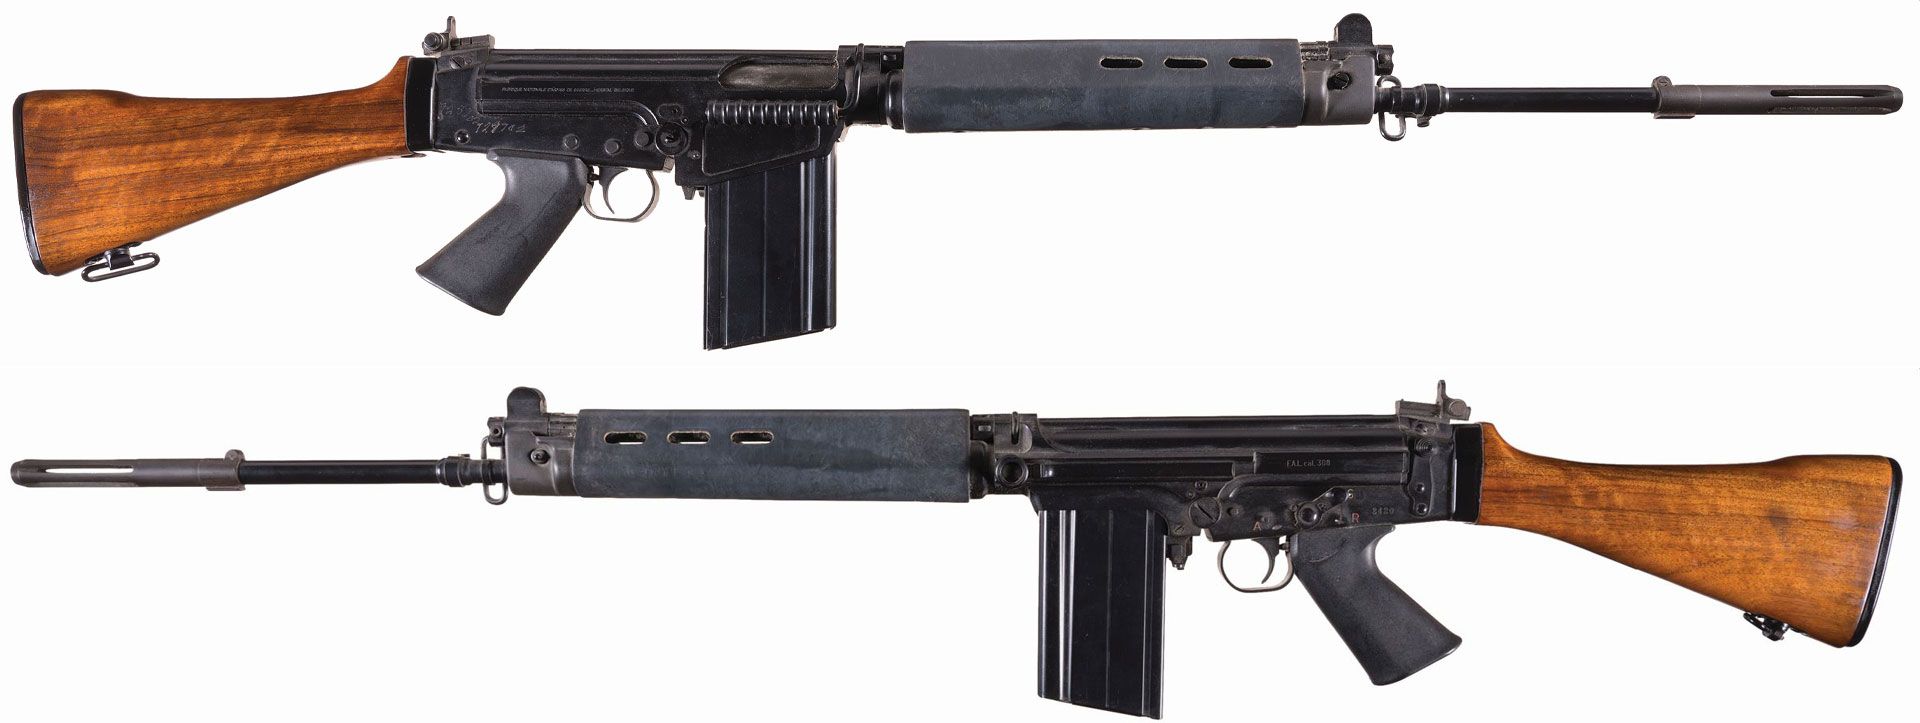 FN-G-Series-semi-automatic-rifle